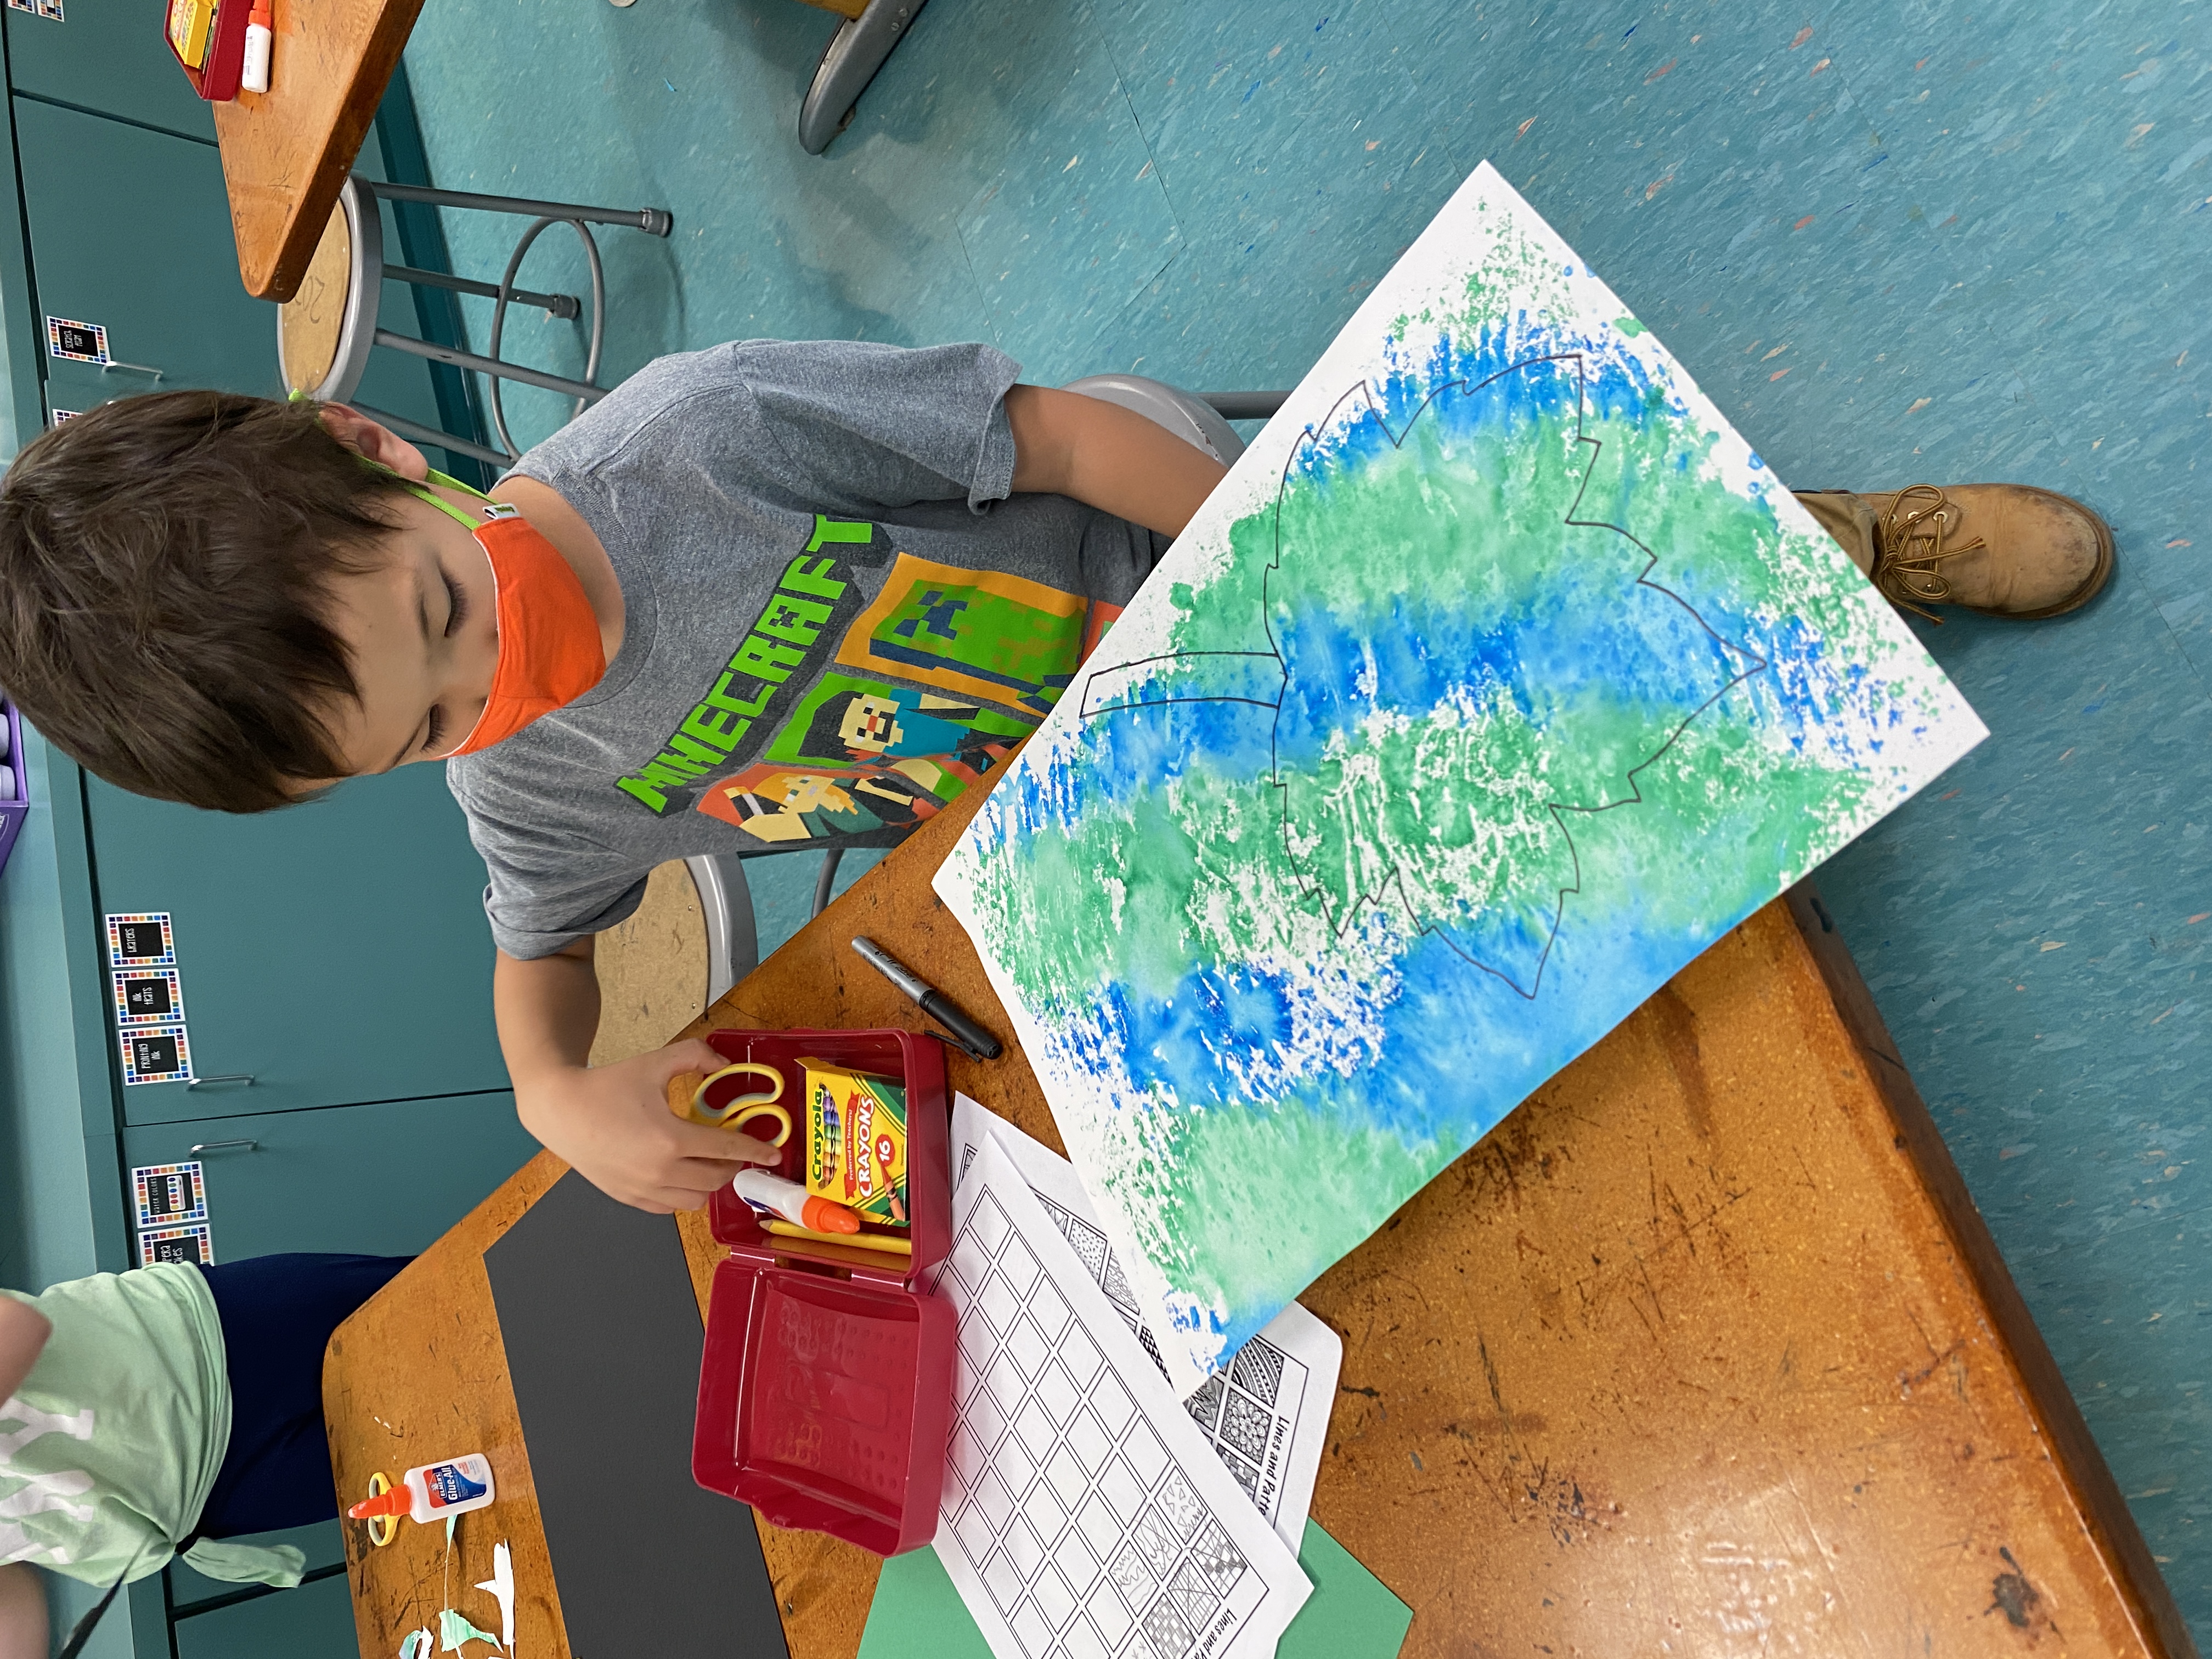 Third grade students attend art class at EE